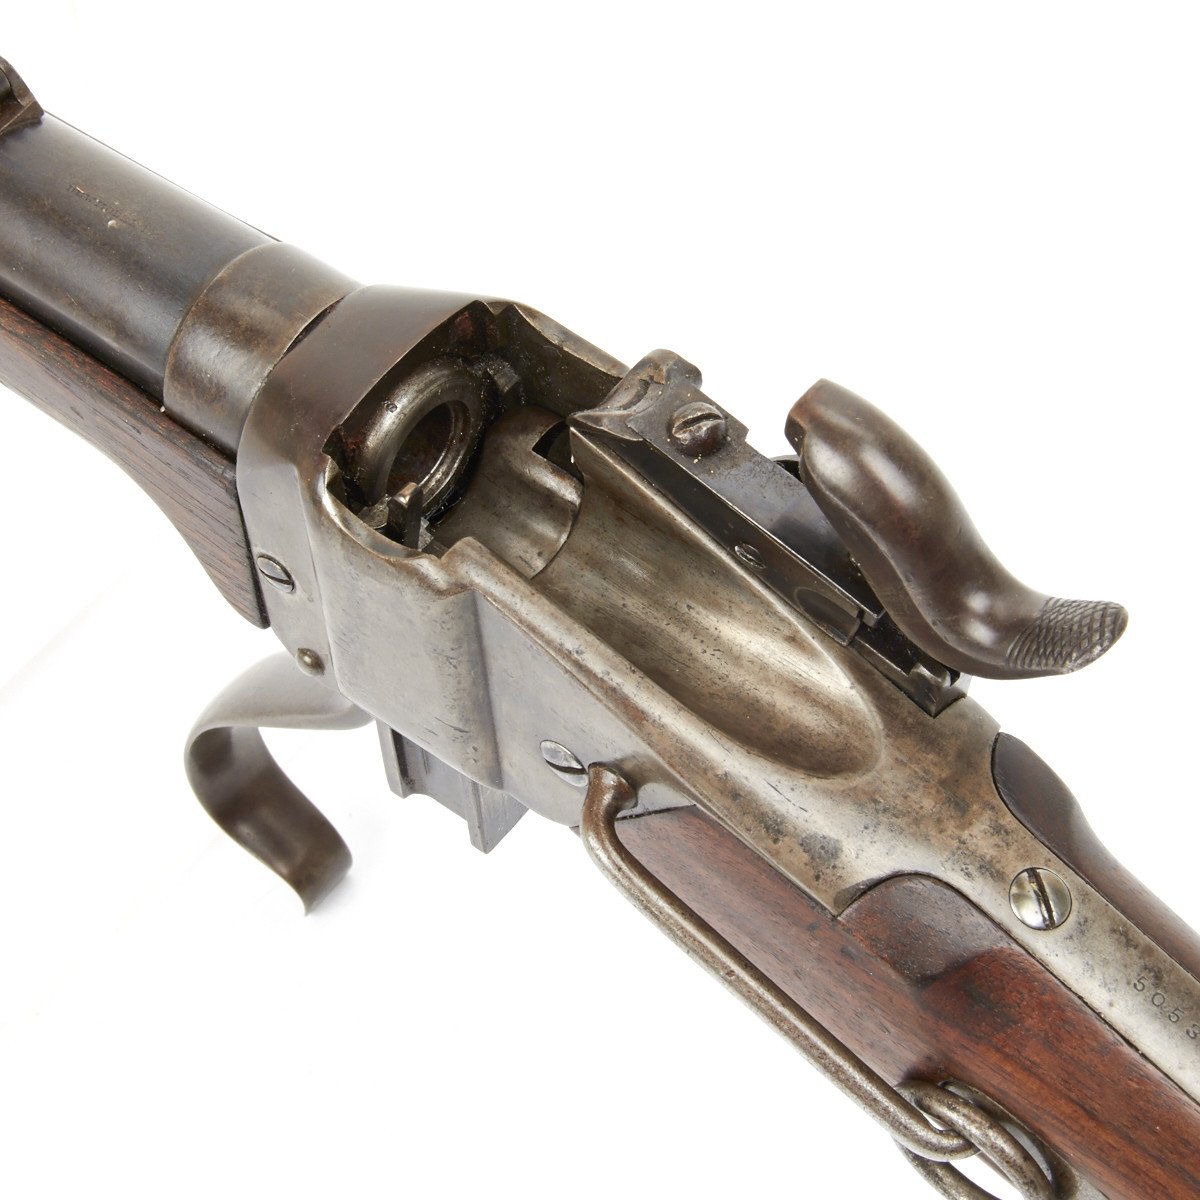 1859 sharps rifle serial numbers